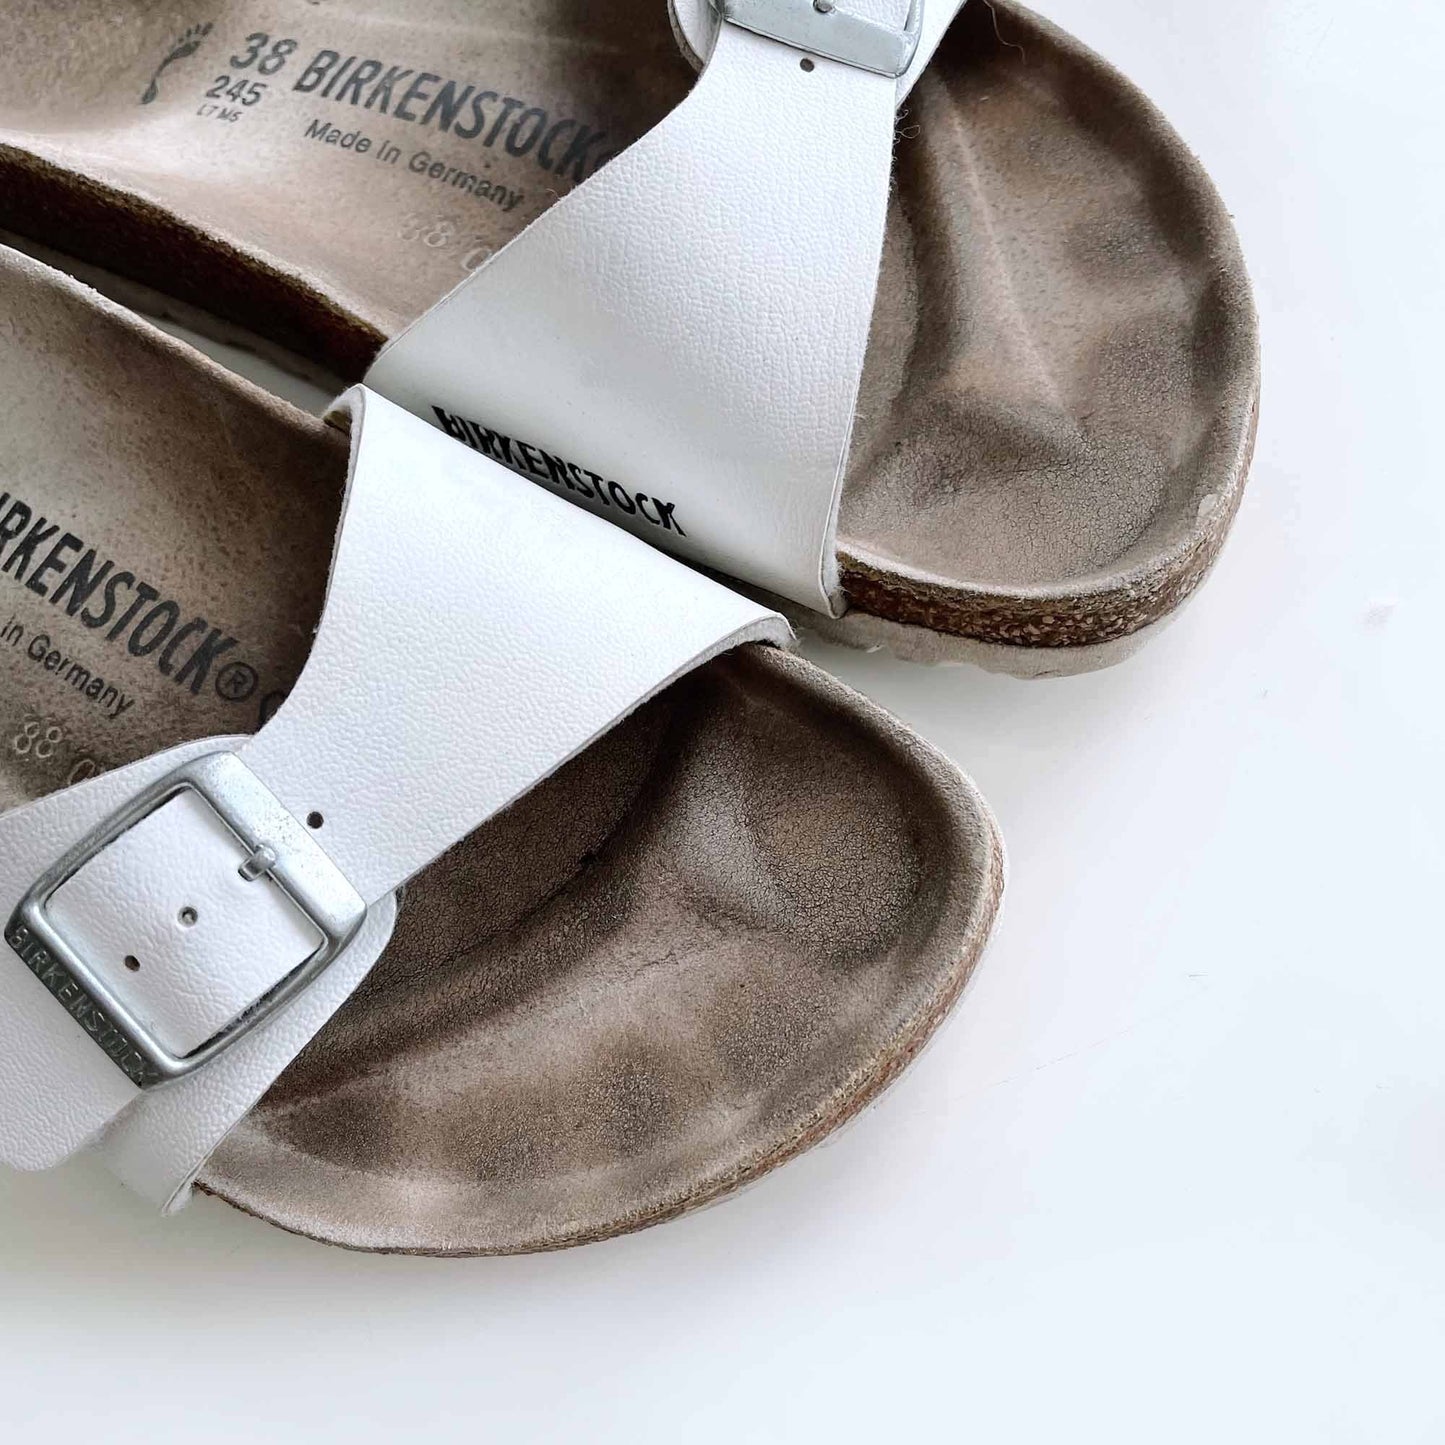 birkenstock madrid one-strap sandals - size 38